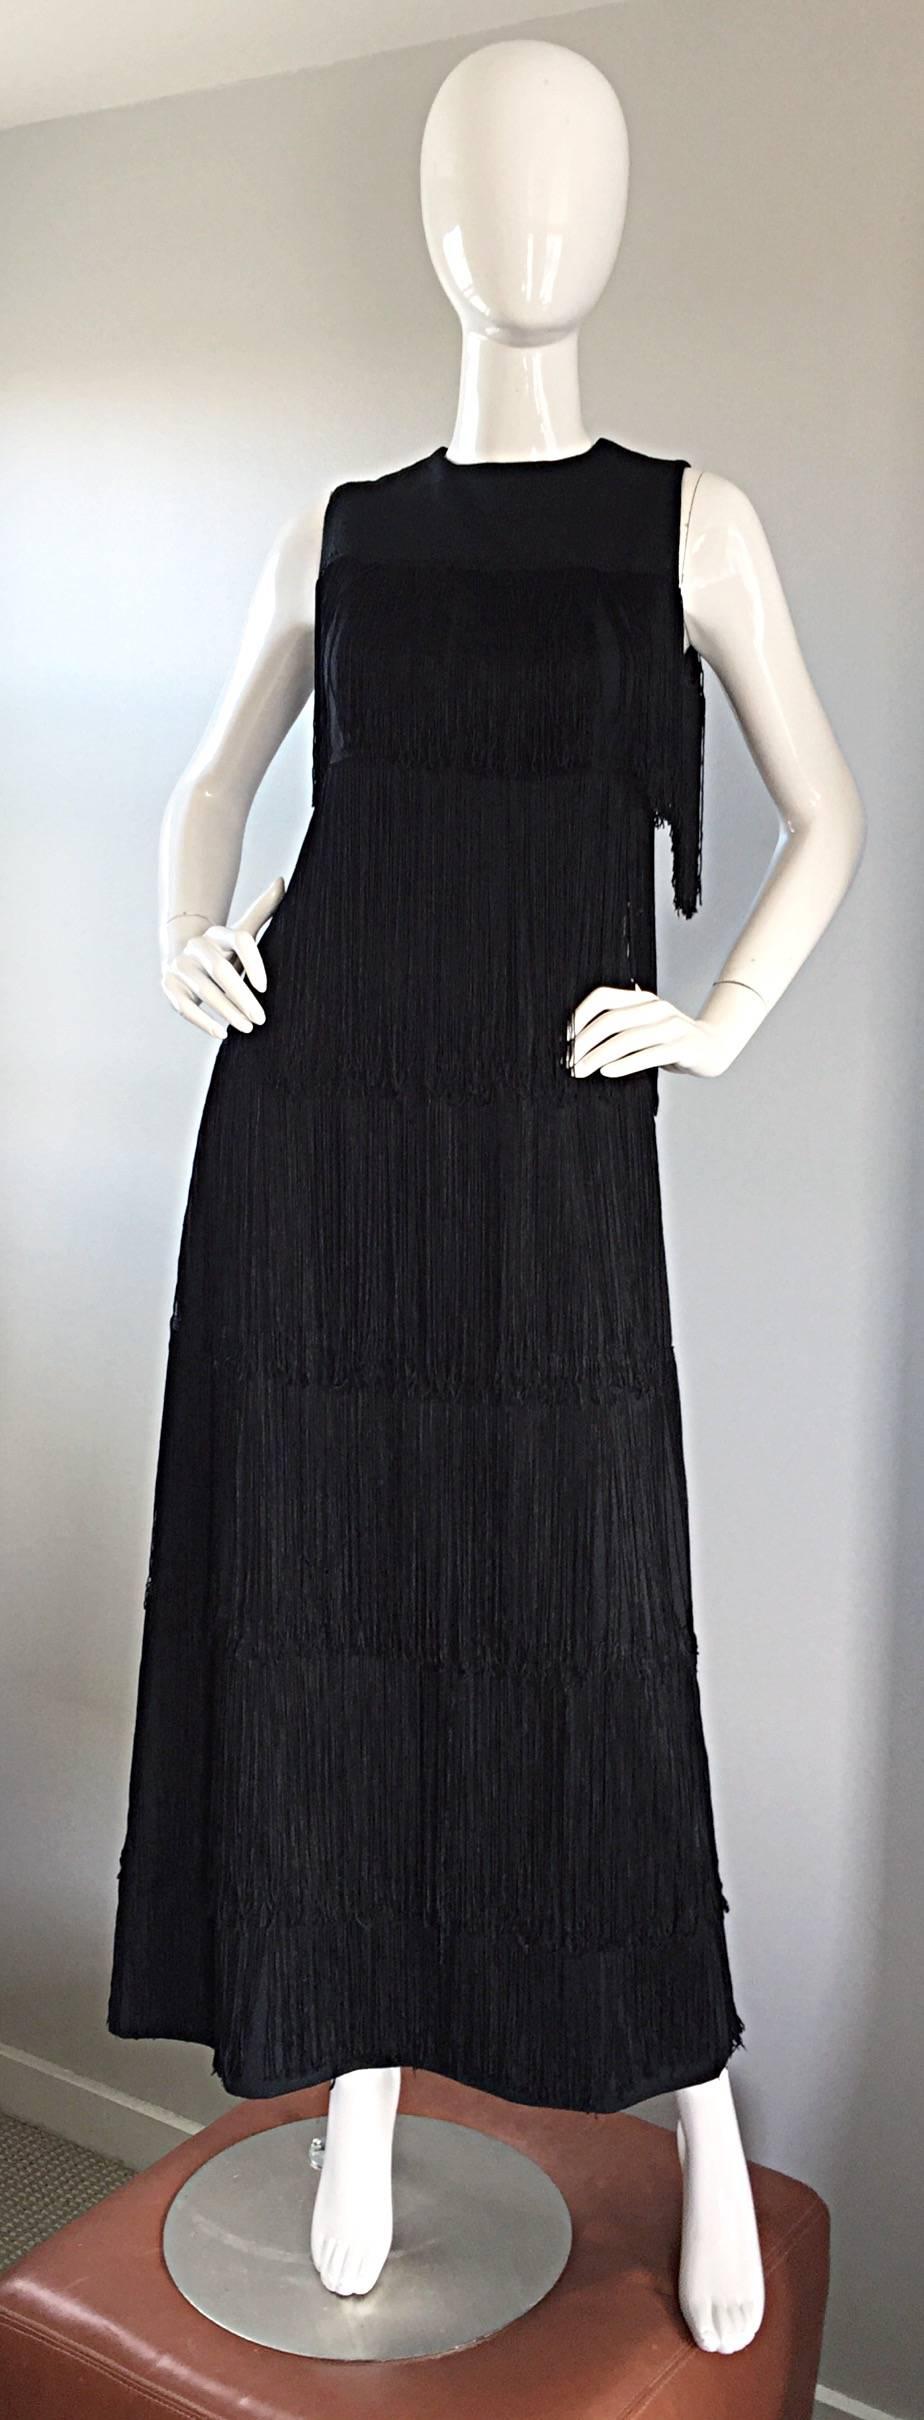 1960s Alfred Werber Black Fully Fringed Crepe Full Length Vintage Dress / Gown 1